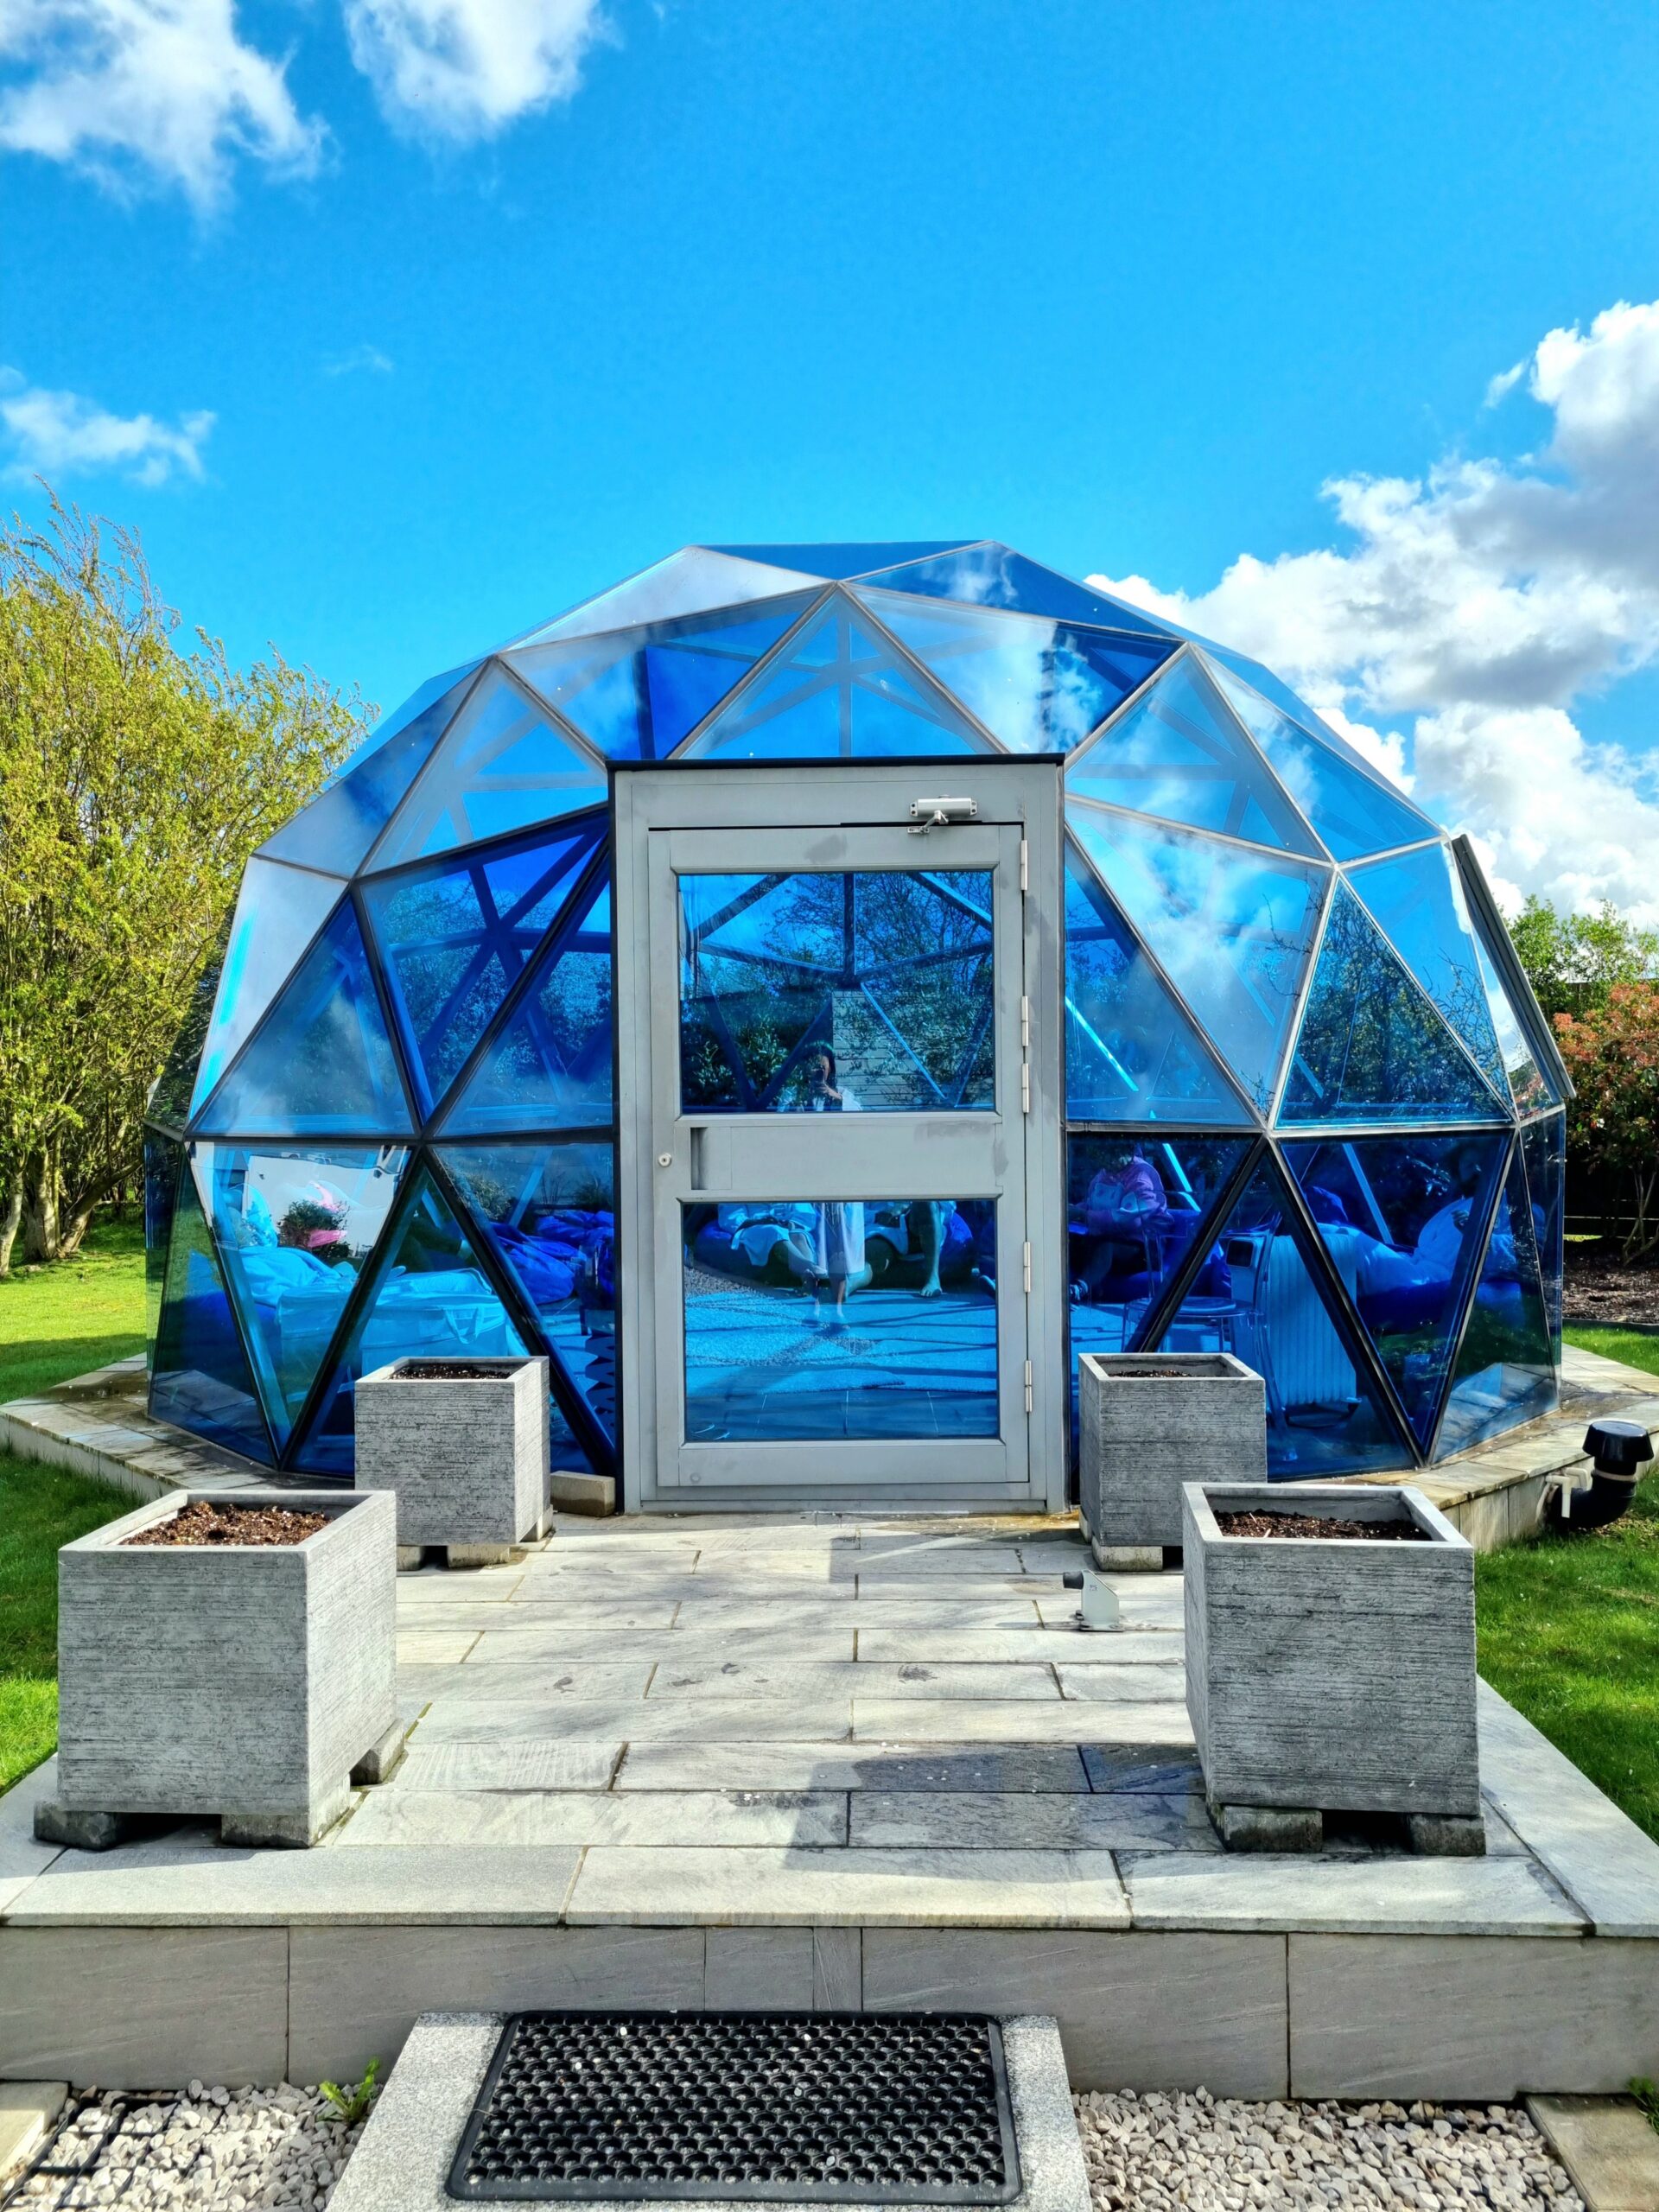 <img src="mindfulness.jpg" alt="mindfulness outdoor dome glasshouse retreat"/>